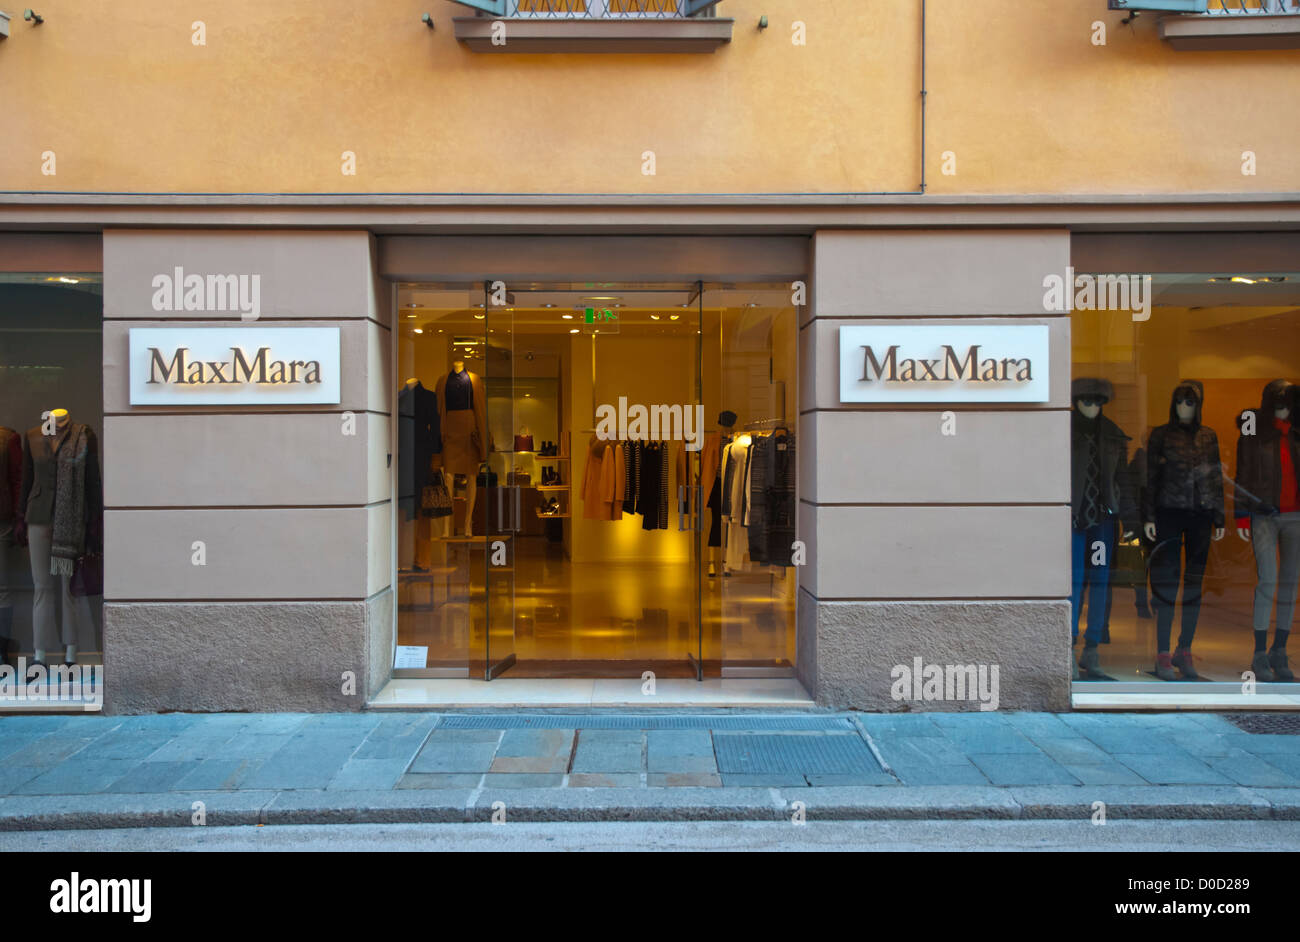 MaxMara fashion shop originates in Reggio Emilia city Emilia-Romagna region northern Italy Europe Stock Photo